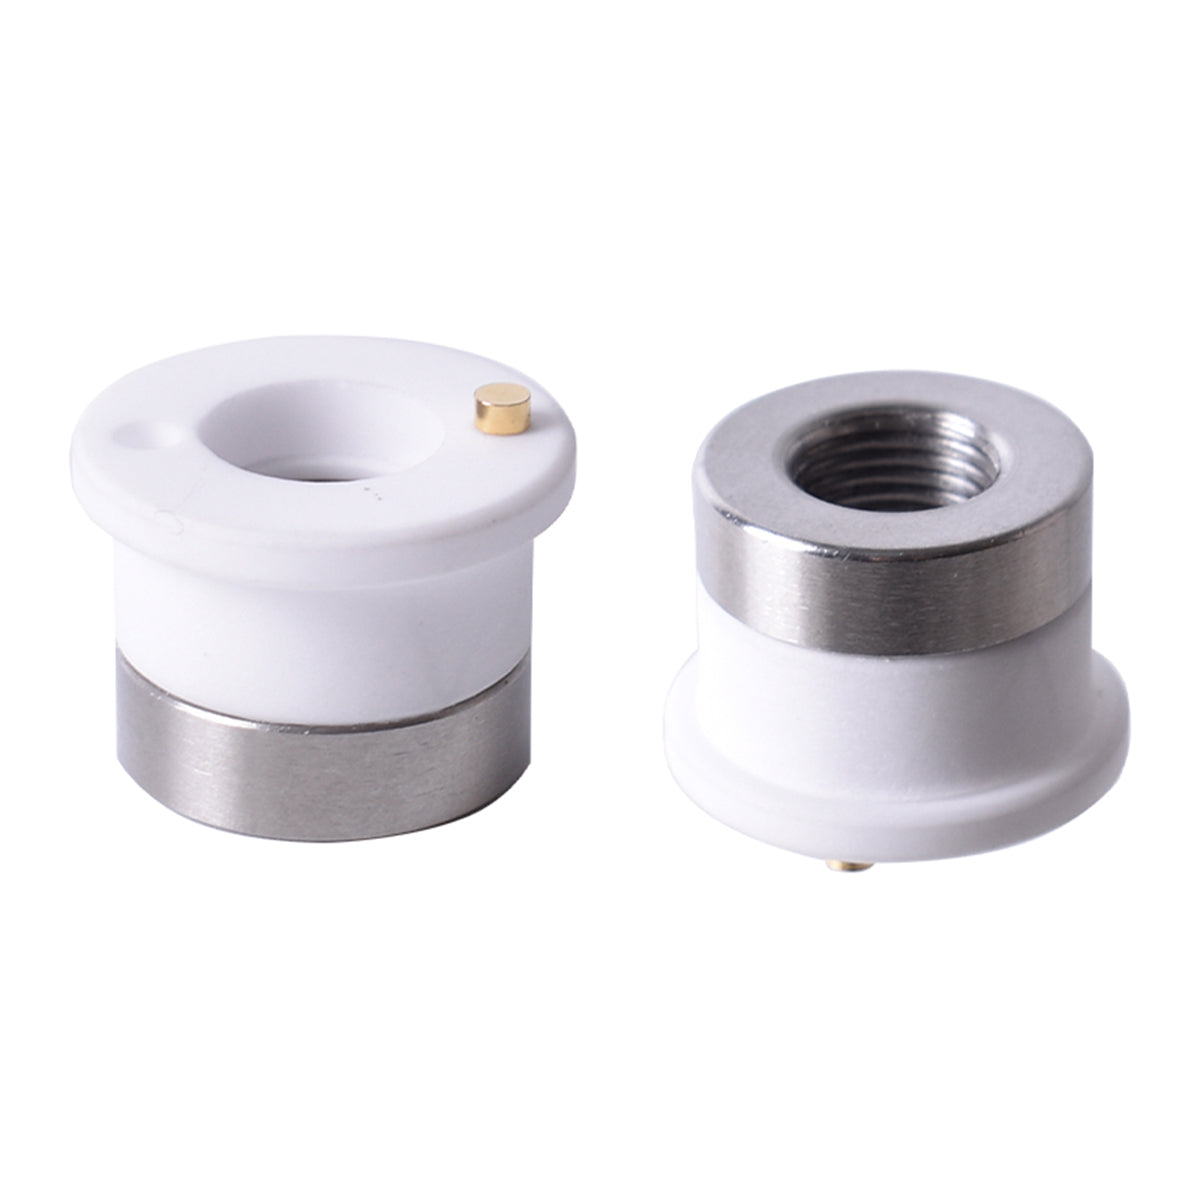 Startnow OSPRI Laser Ceramic Ring Dia.17.8mm 21.4mm Welding Nozzles Holder Parts